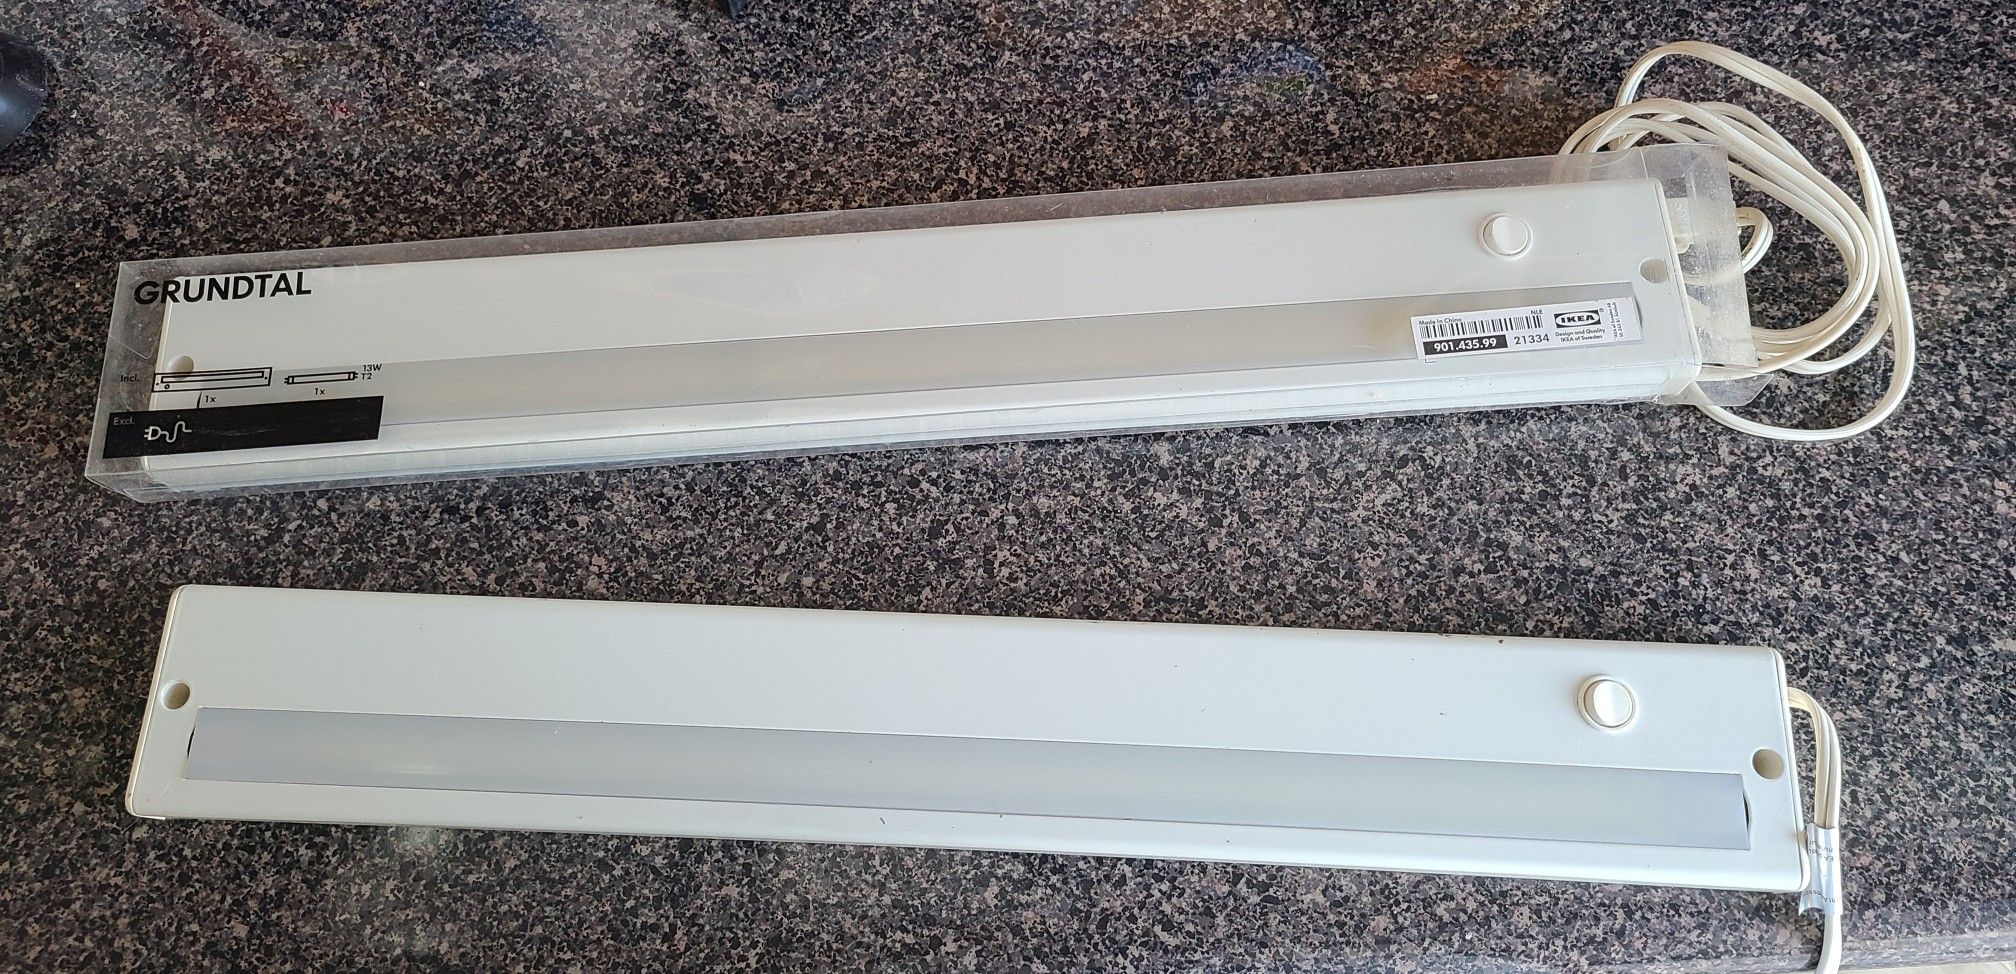 2 Ikea Grundtal countertop lights